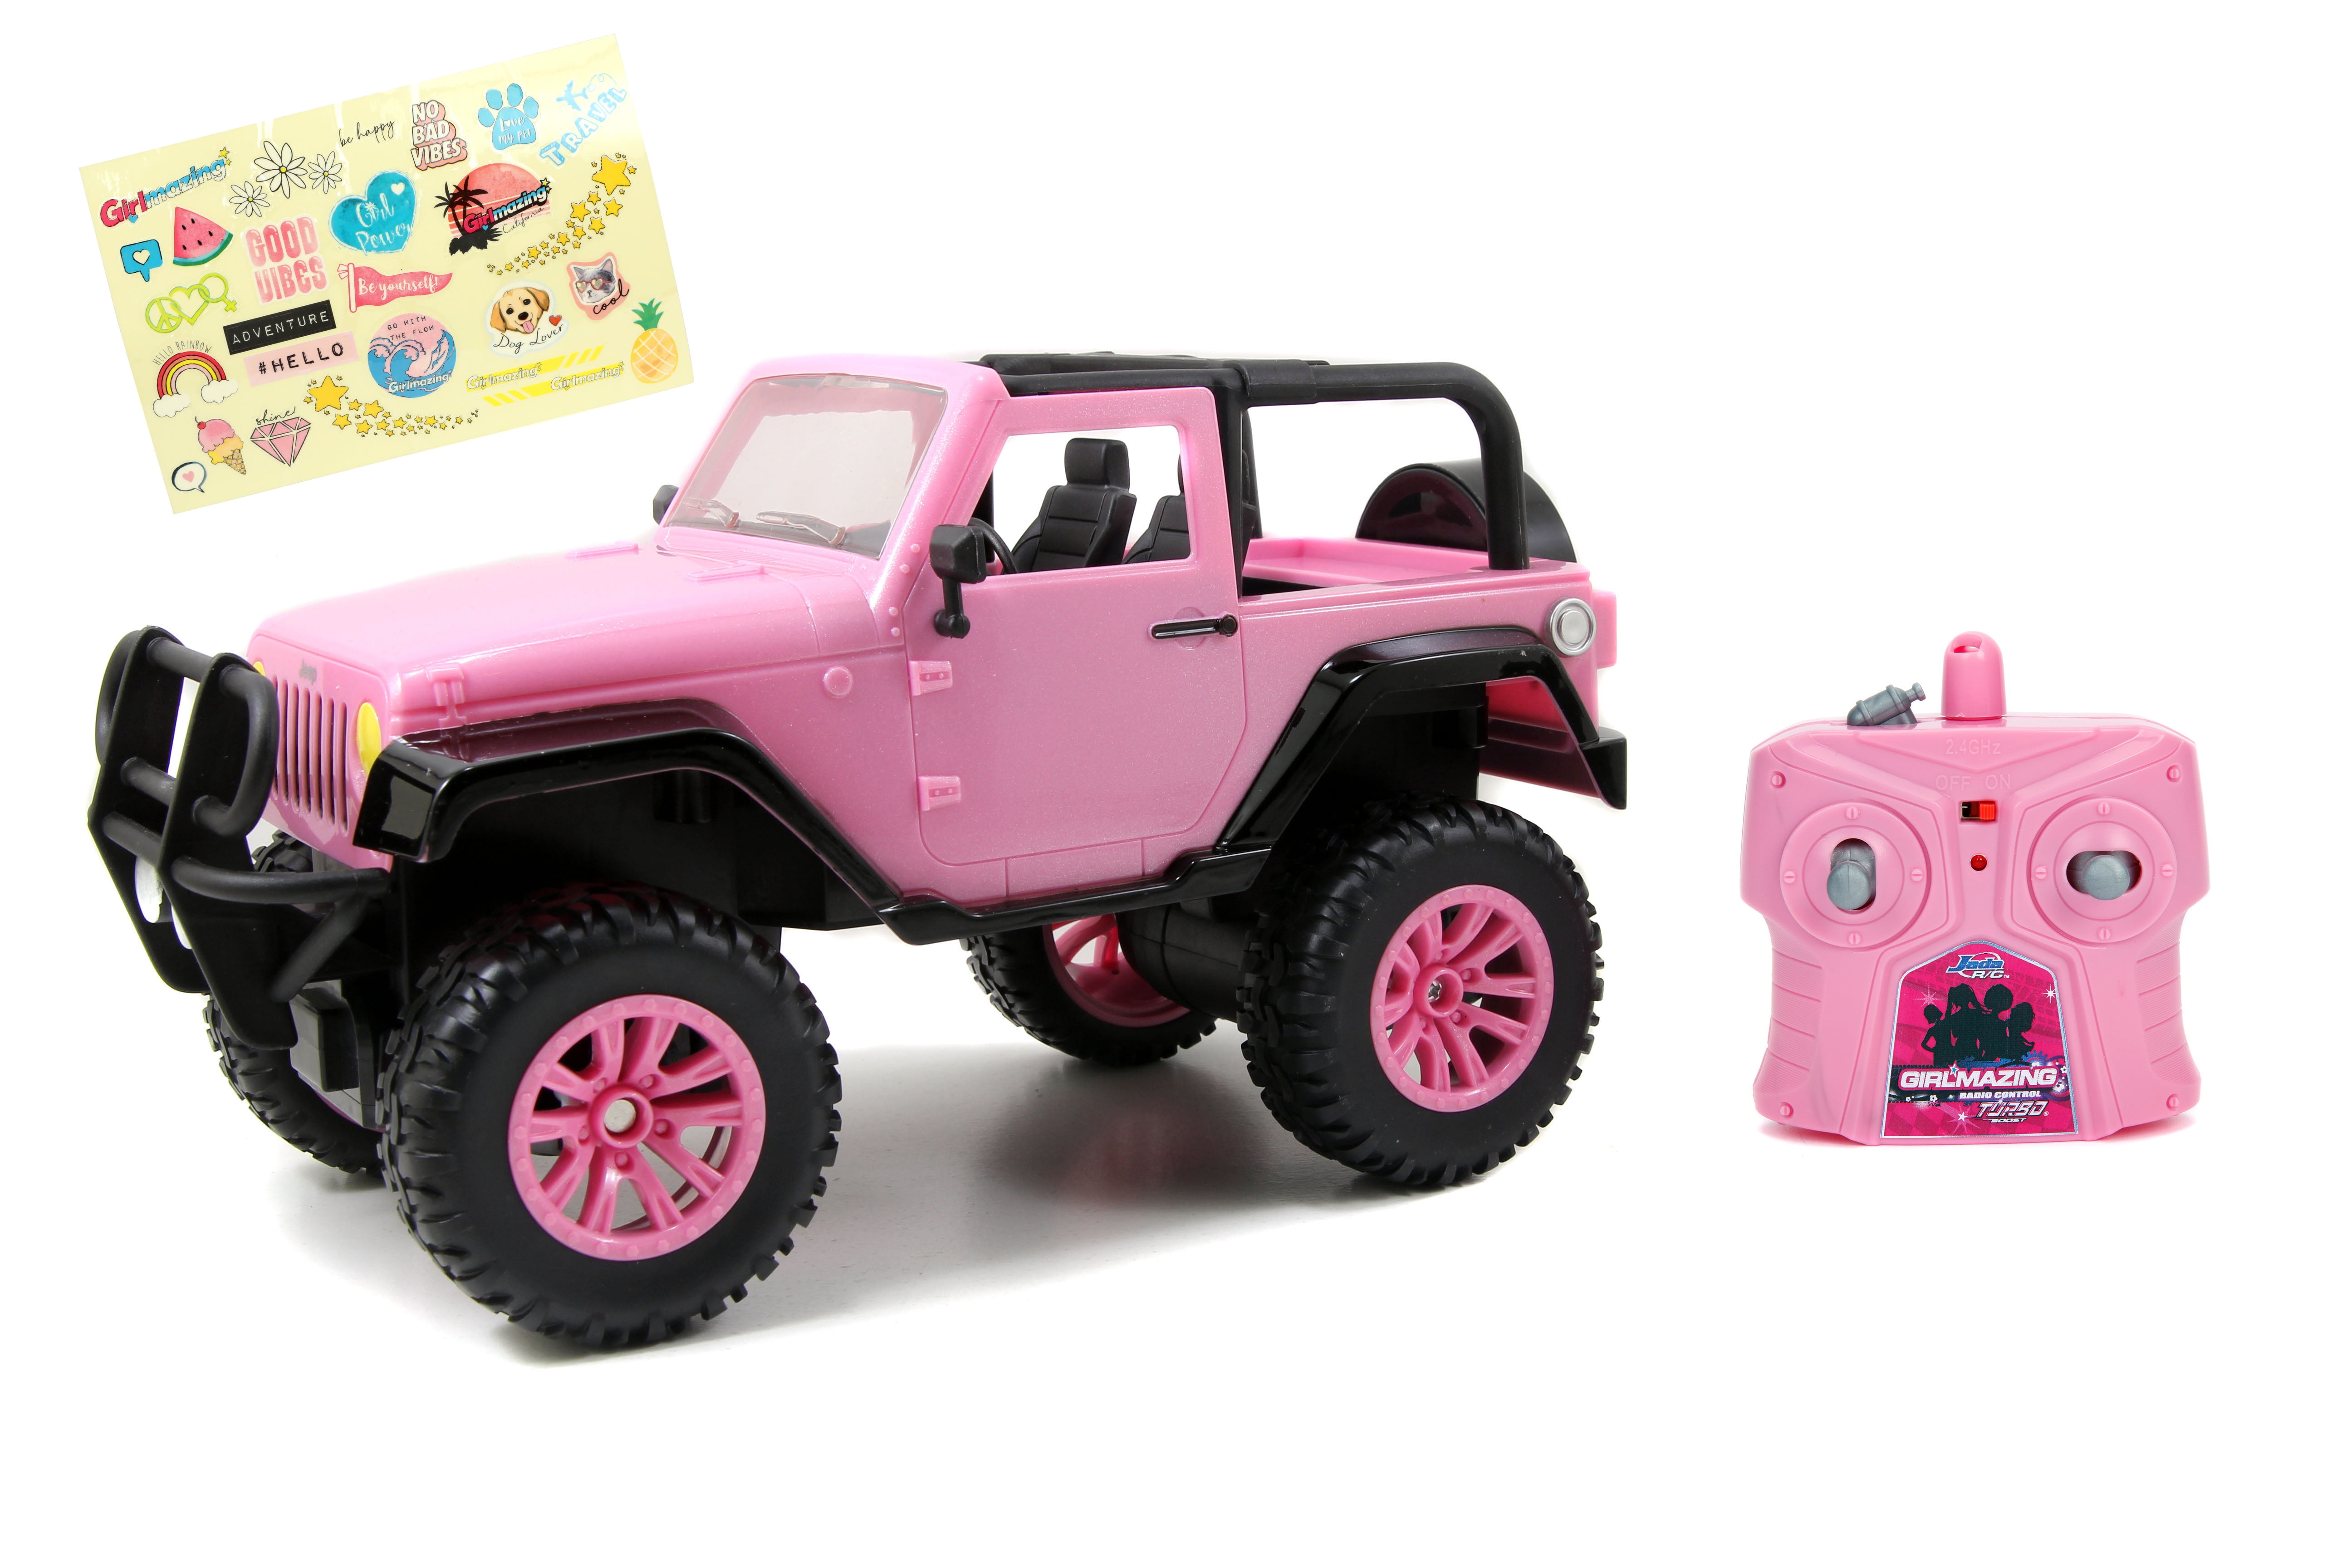 1 Black & Camo 16 Scale Remote Control Jada Toys Girlmazing Jeep Wrangler RC Car 